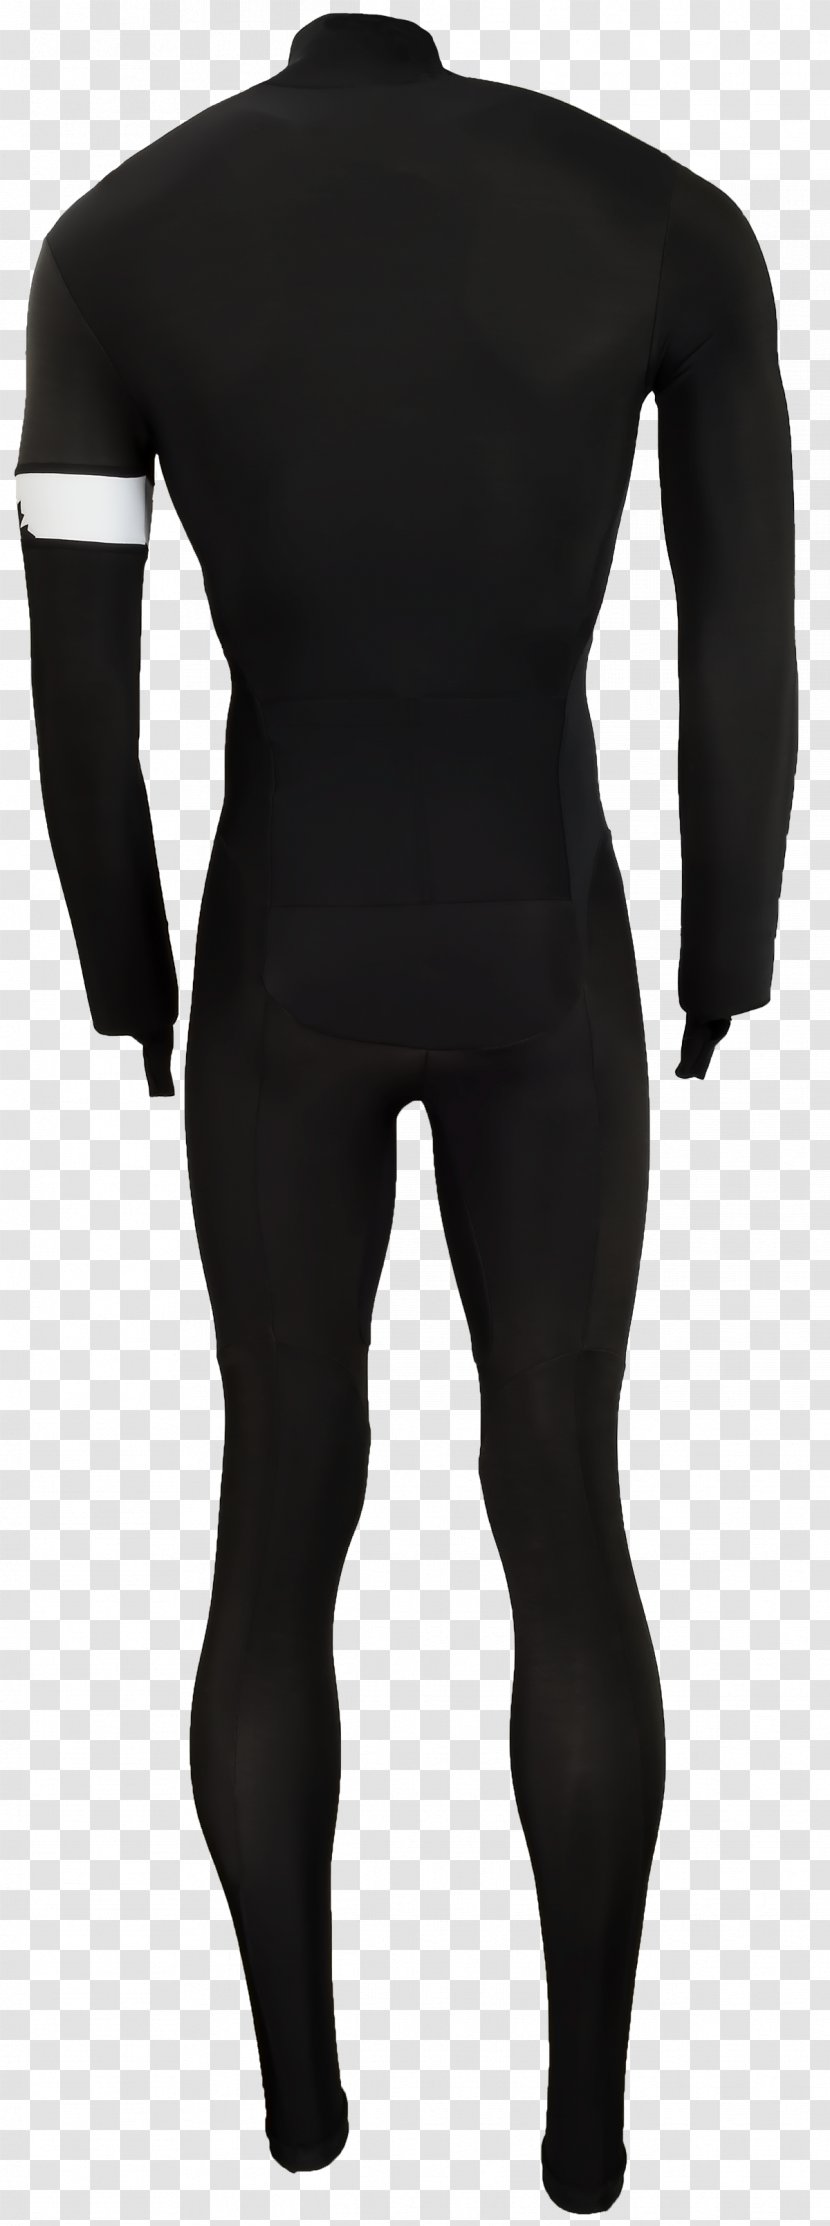 Wetsuit Shoulder Black M - Personal Protective Equipment - Speed Skating Transparent PNG